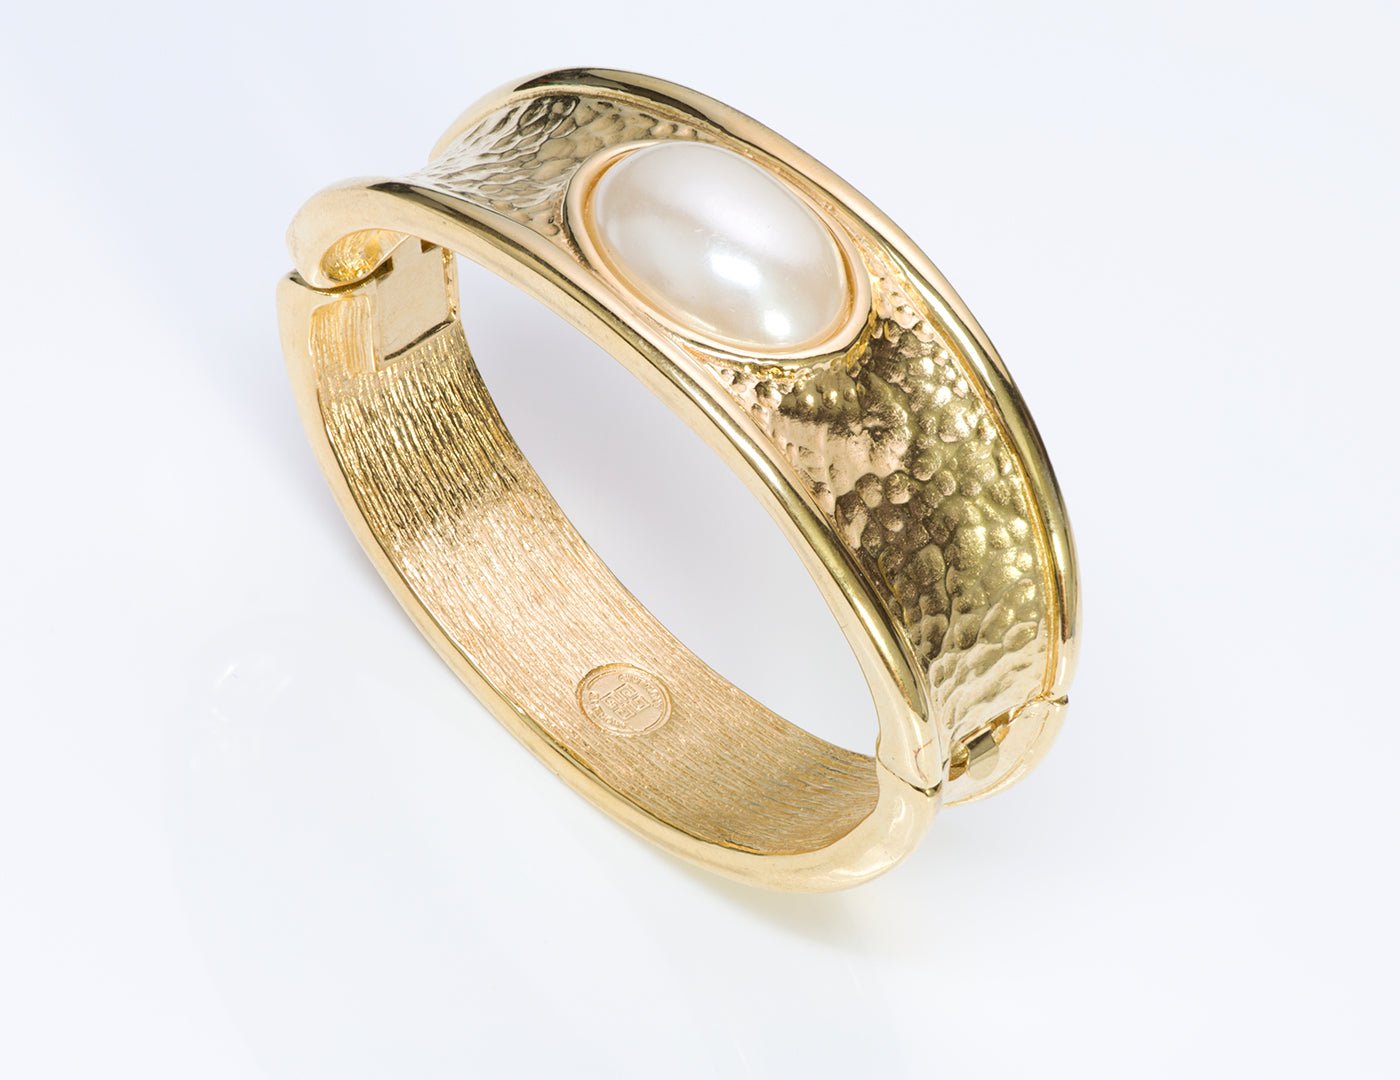 Givenchy Paris Gold Tone Hammered Pearl Bangle Bracelet